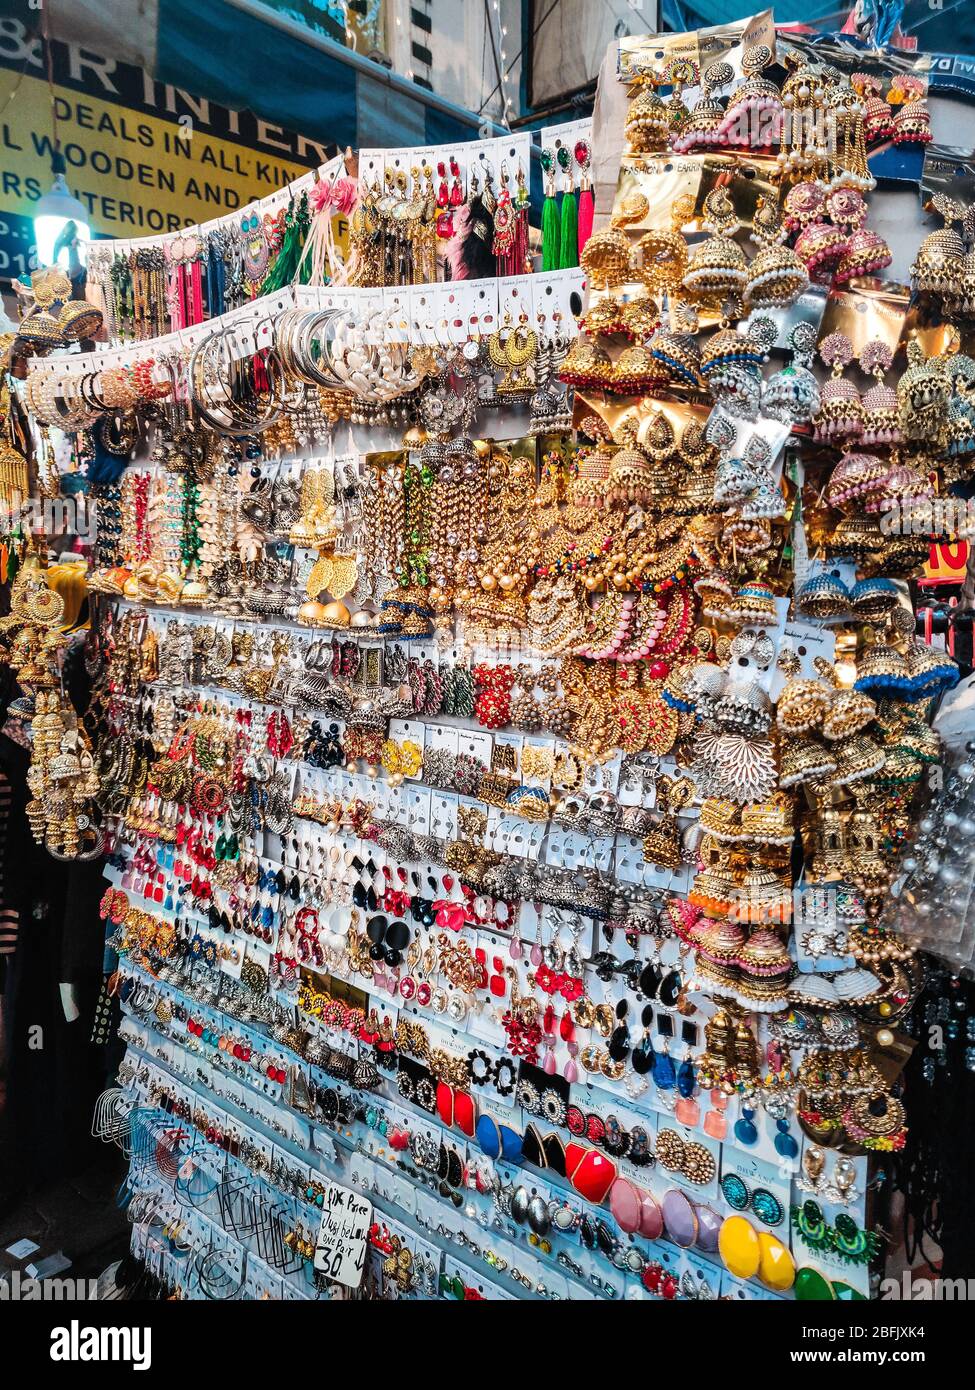 A shop selling earrings in Delhi's Sarojini Nagar market. Stock Photo